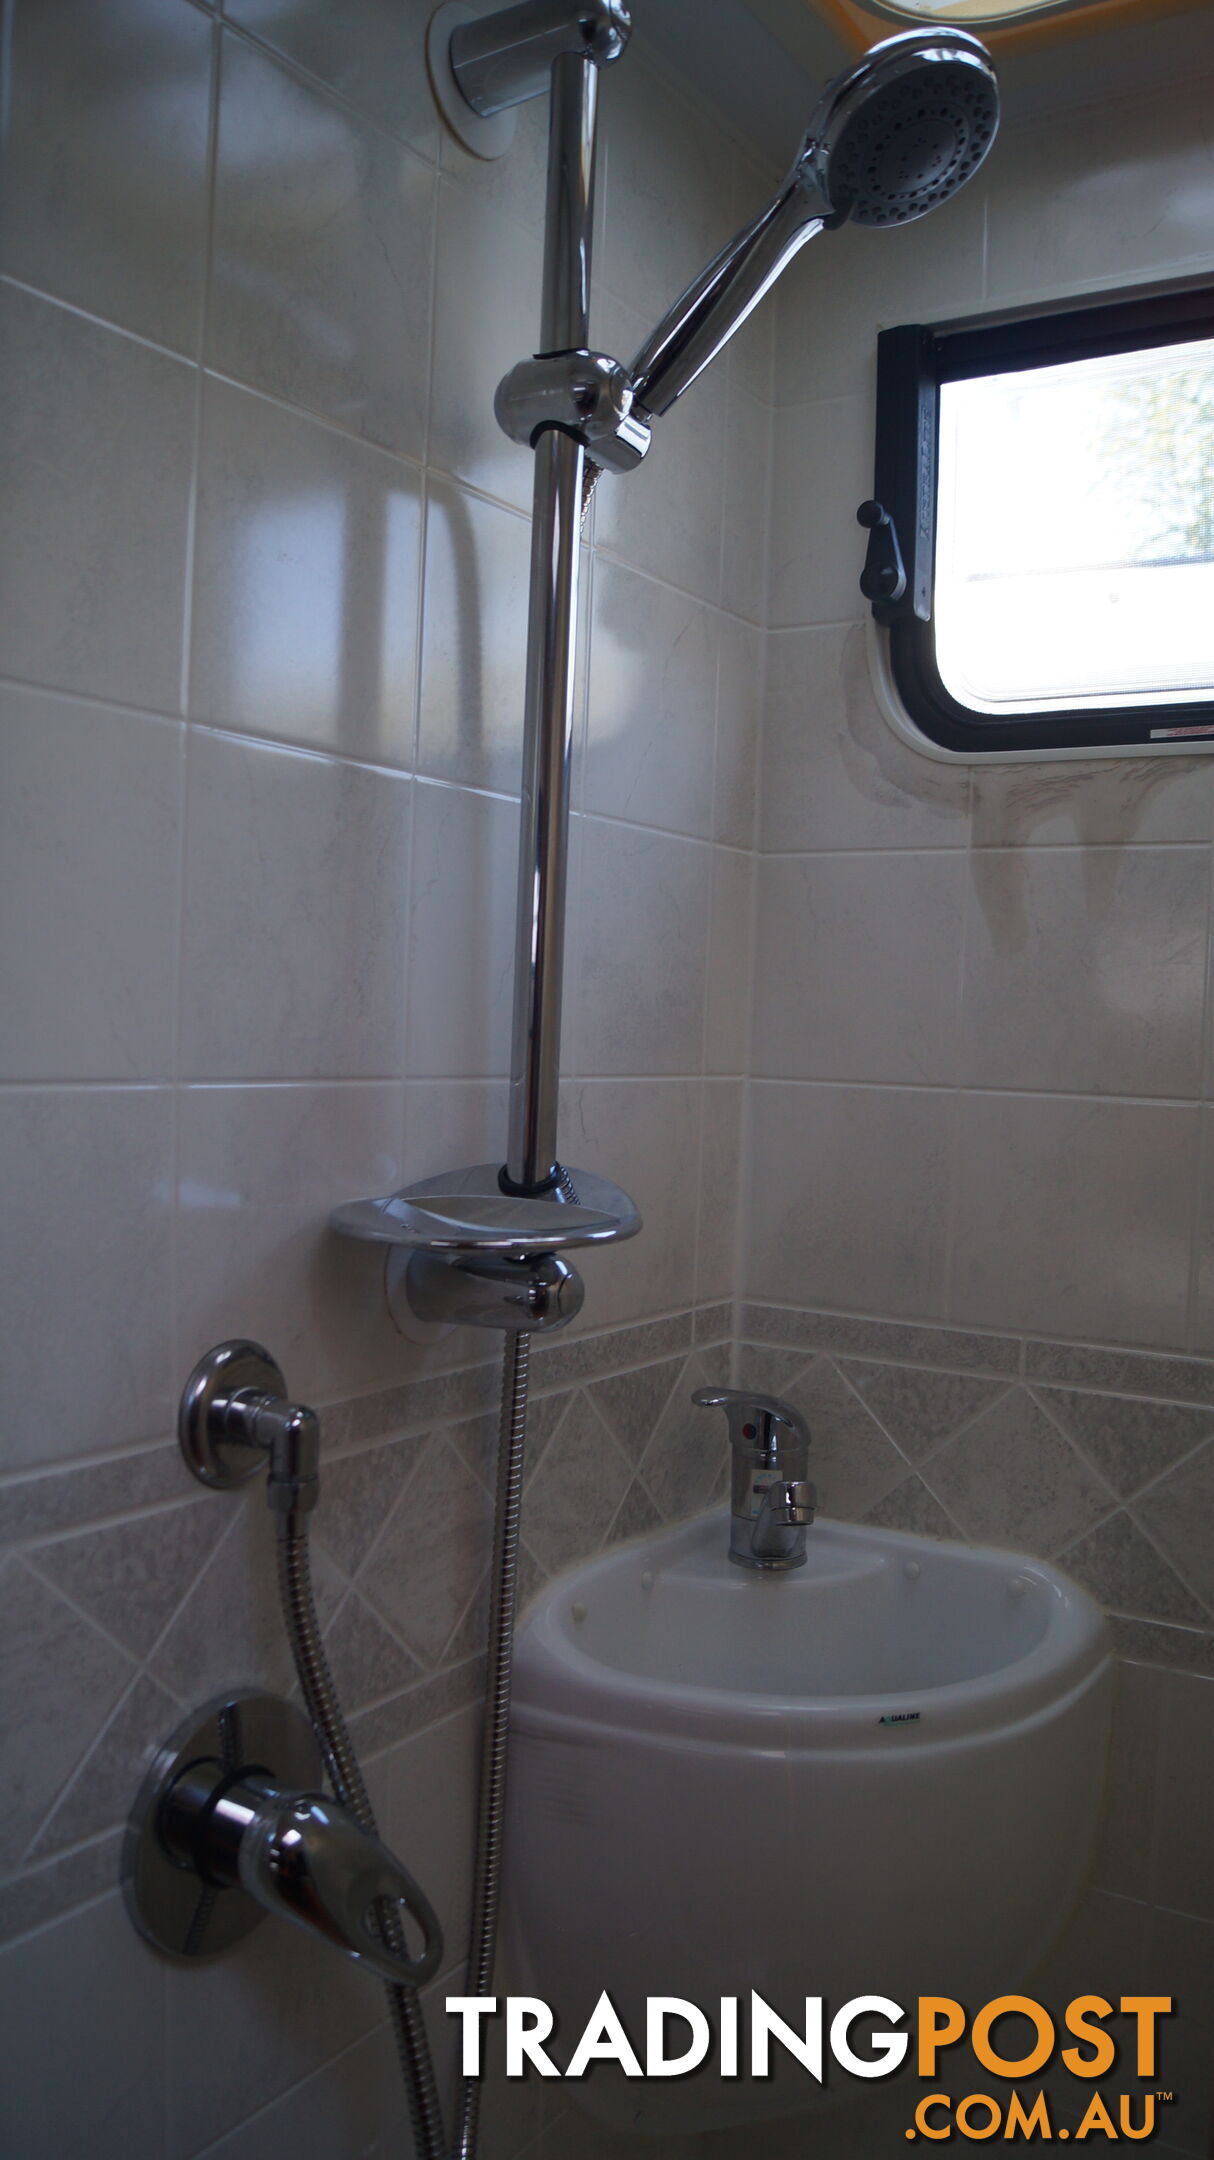 2011 Duet Bunk shower toilet 